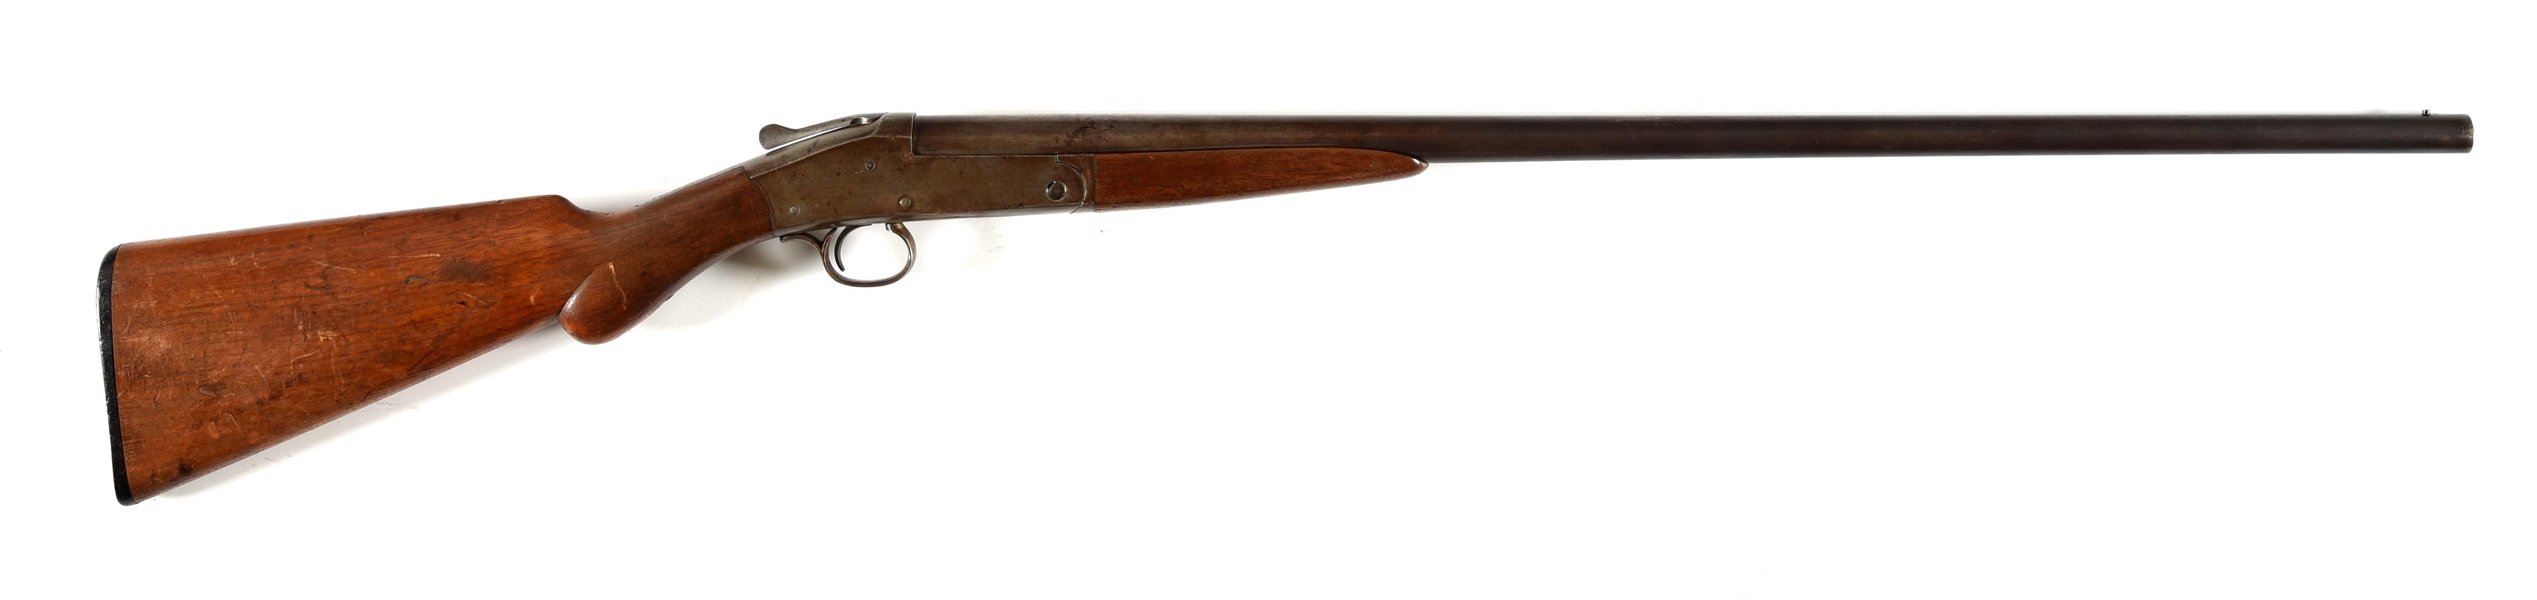 (C) REMINGTON NO. 3 MODEL 1893 SINGLE SHOT SHOTGUN.